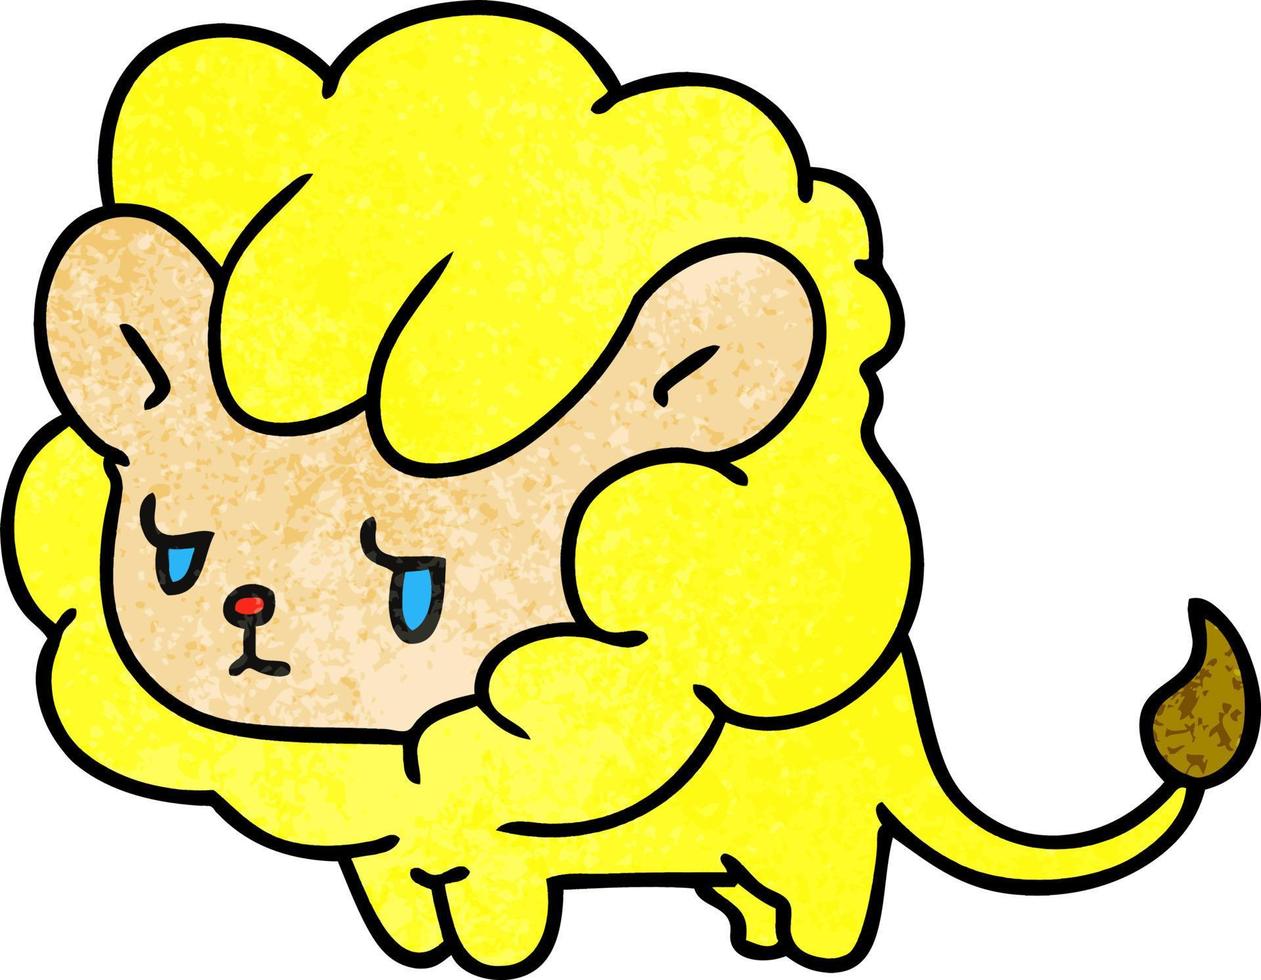 textured cartoon kawaii cute lion cub vector